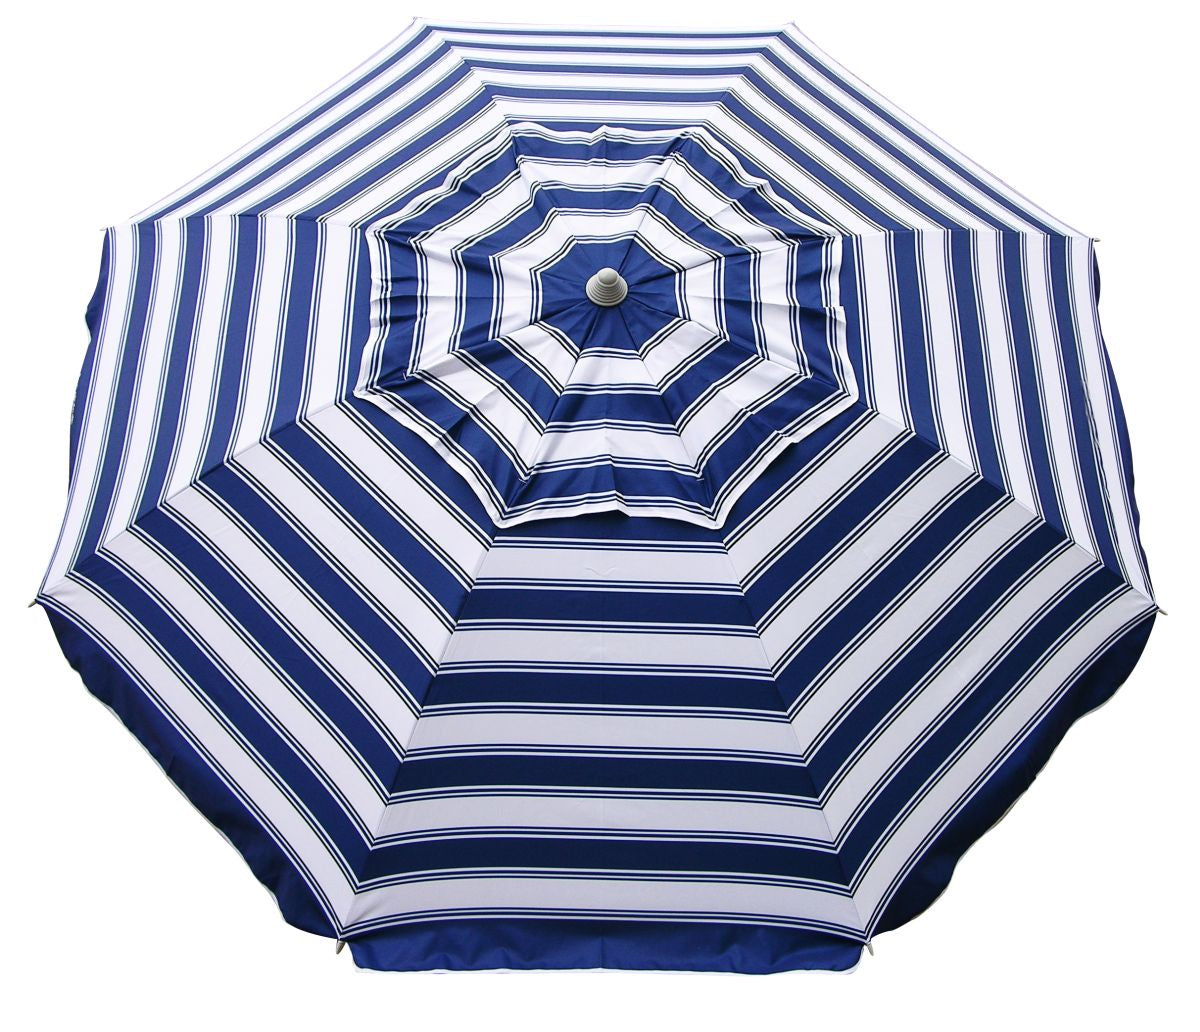 Daytripper 210cm Beach & Shade Umbrella